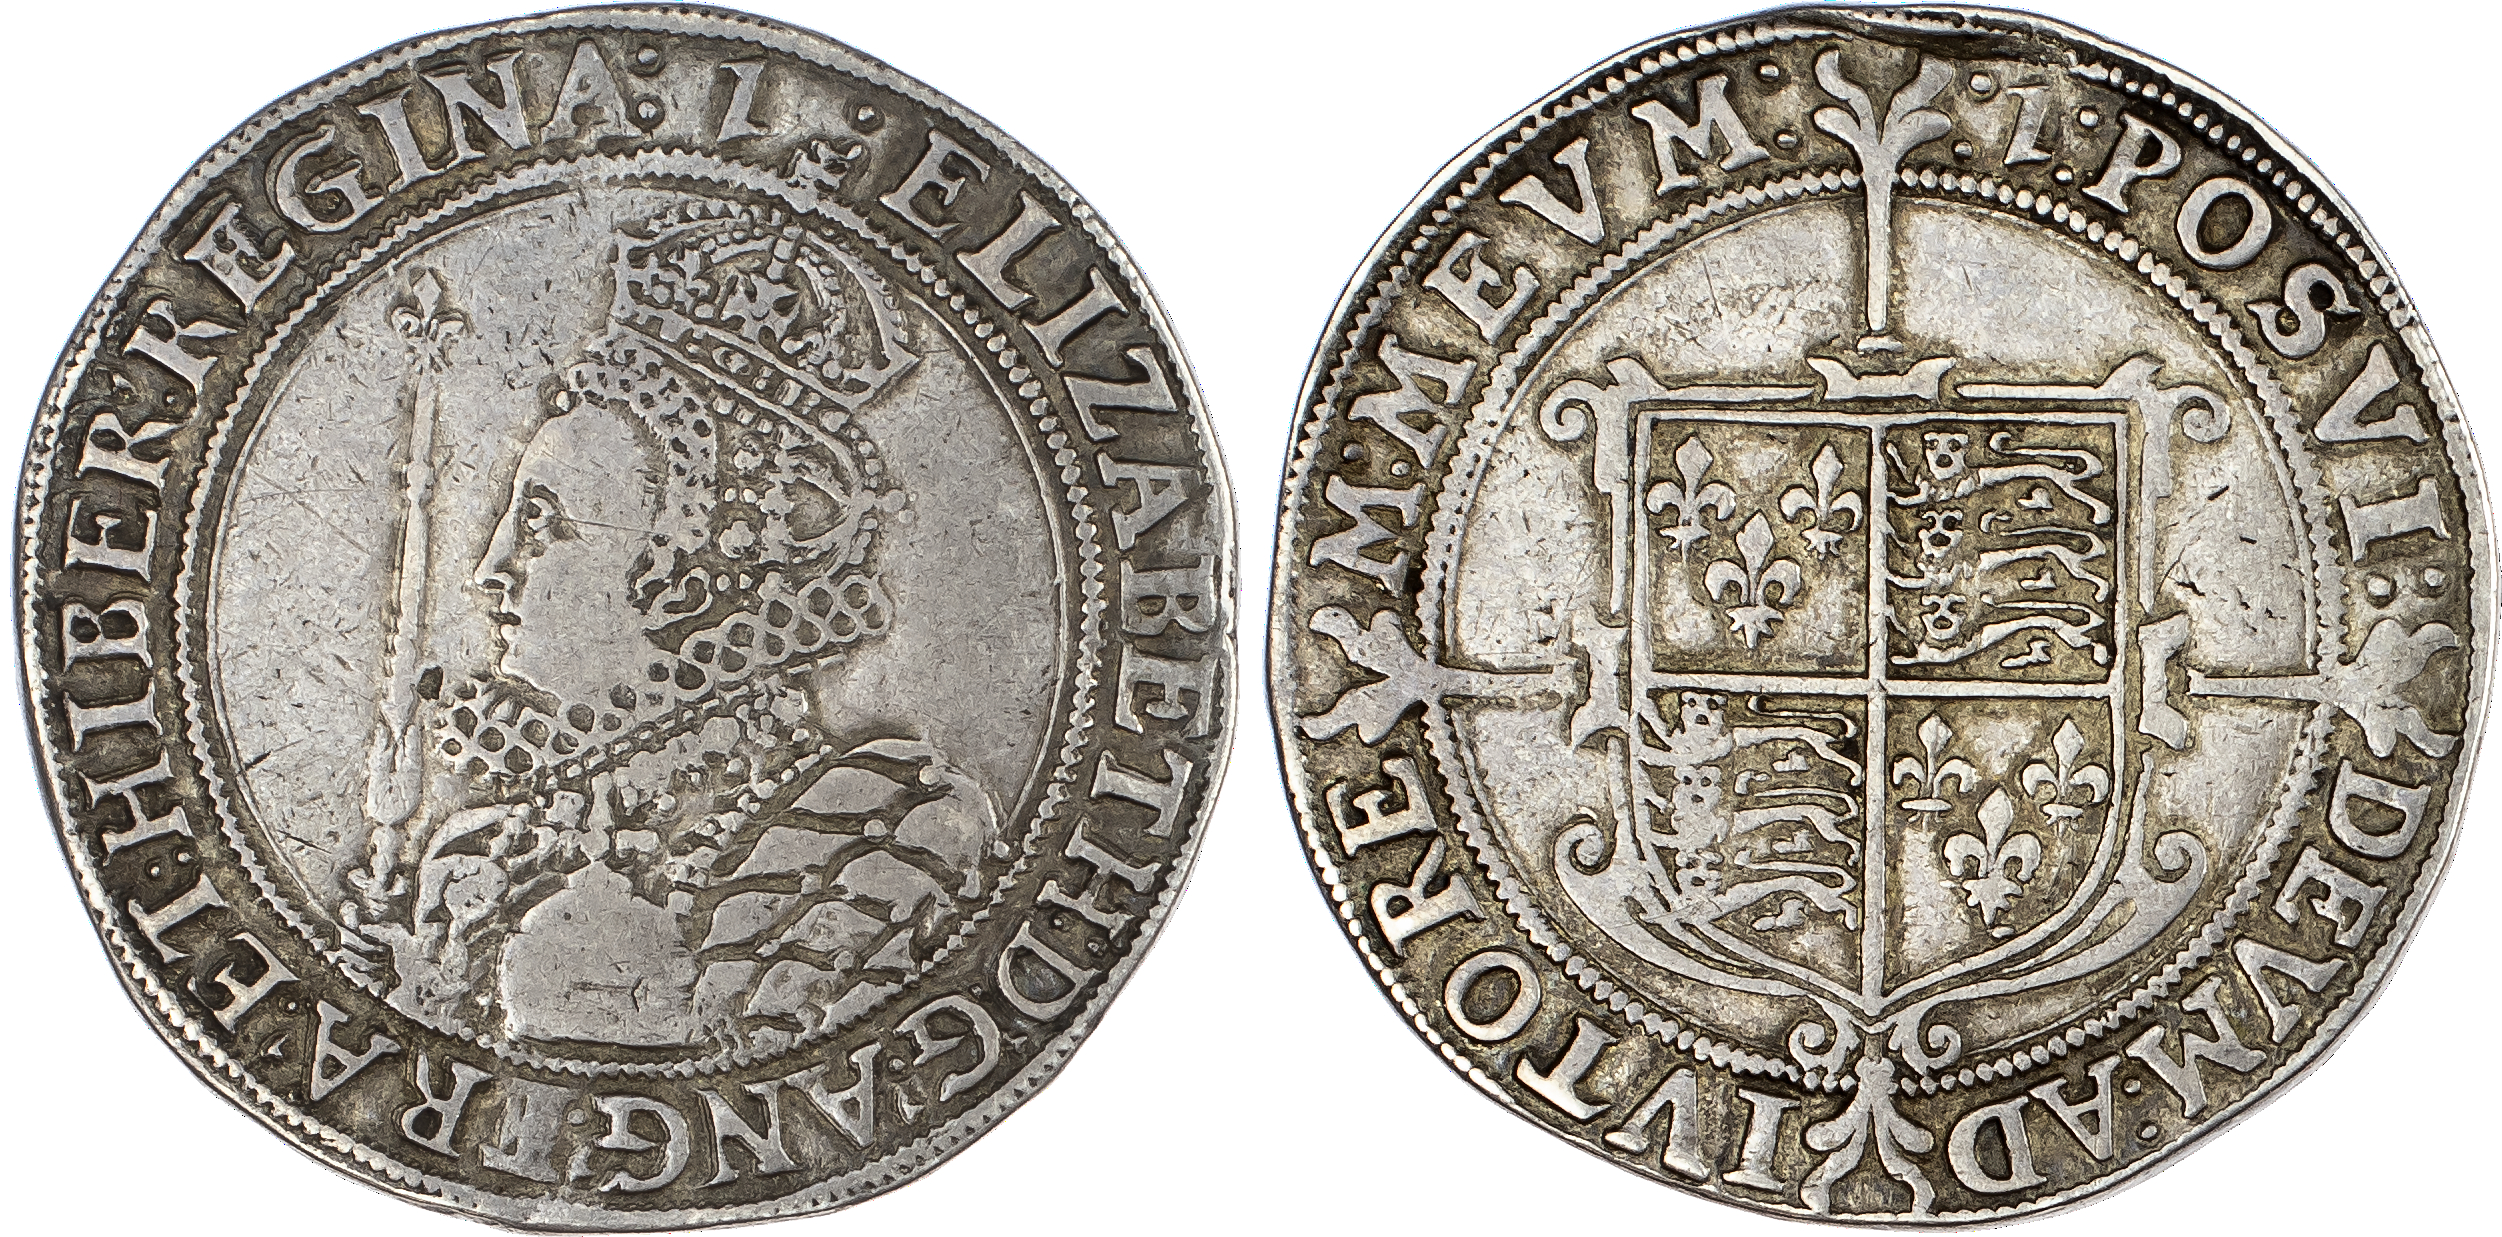 Elizabeth I (1558-1603), Halfcrown, seventh issue (1601-02), mintmark 1